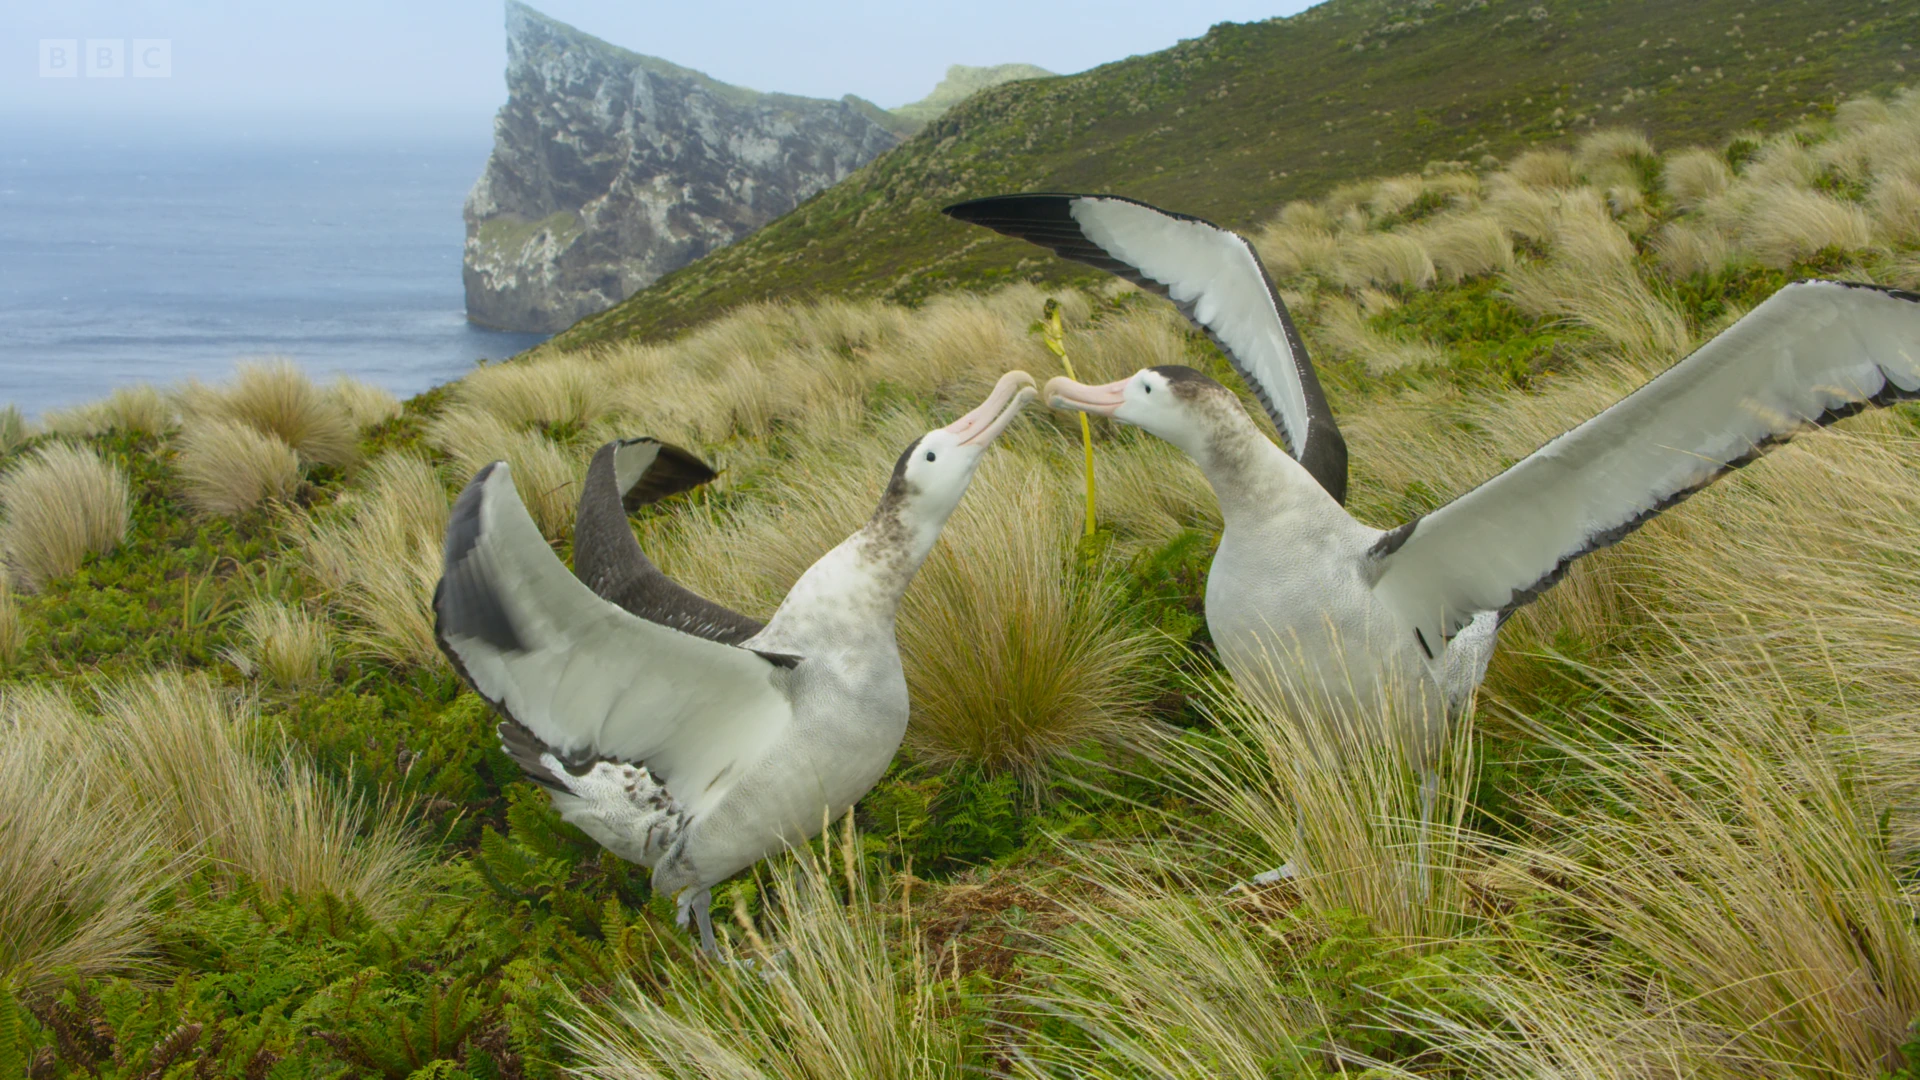 Antipodean albatross (Diomedea antipodensis) as shown in Frozen Planet II - Frozen South